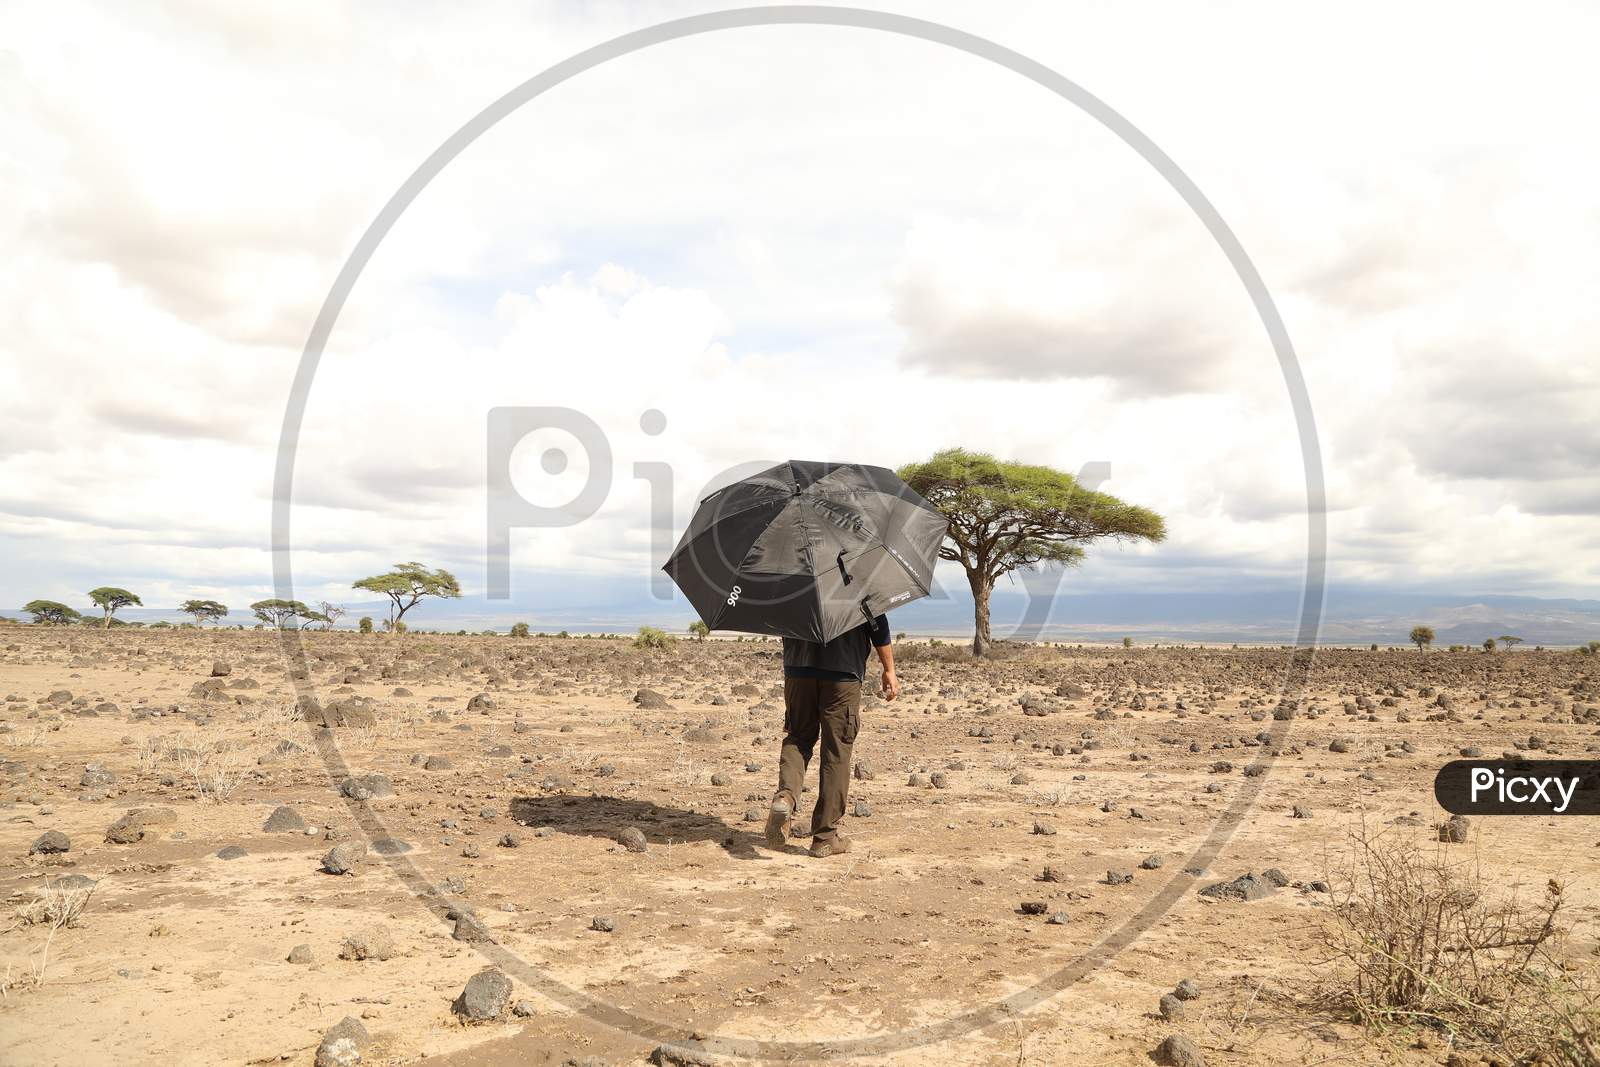 A man walking with an umbrella in Kenya